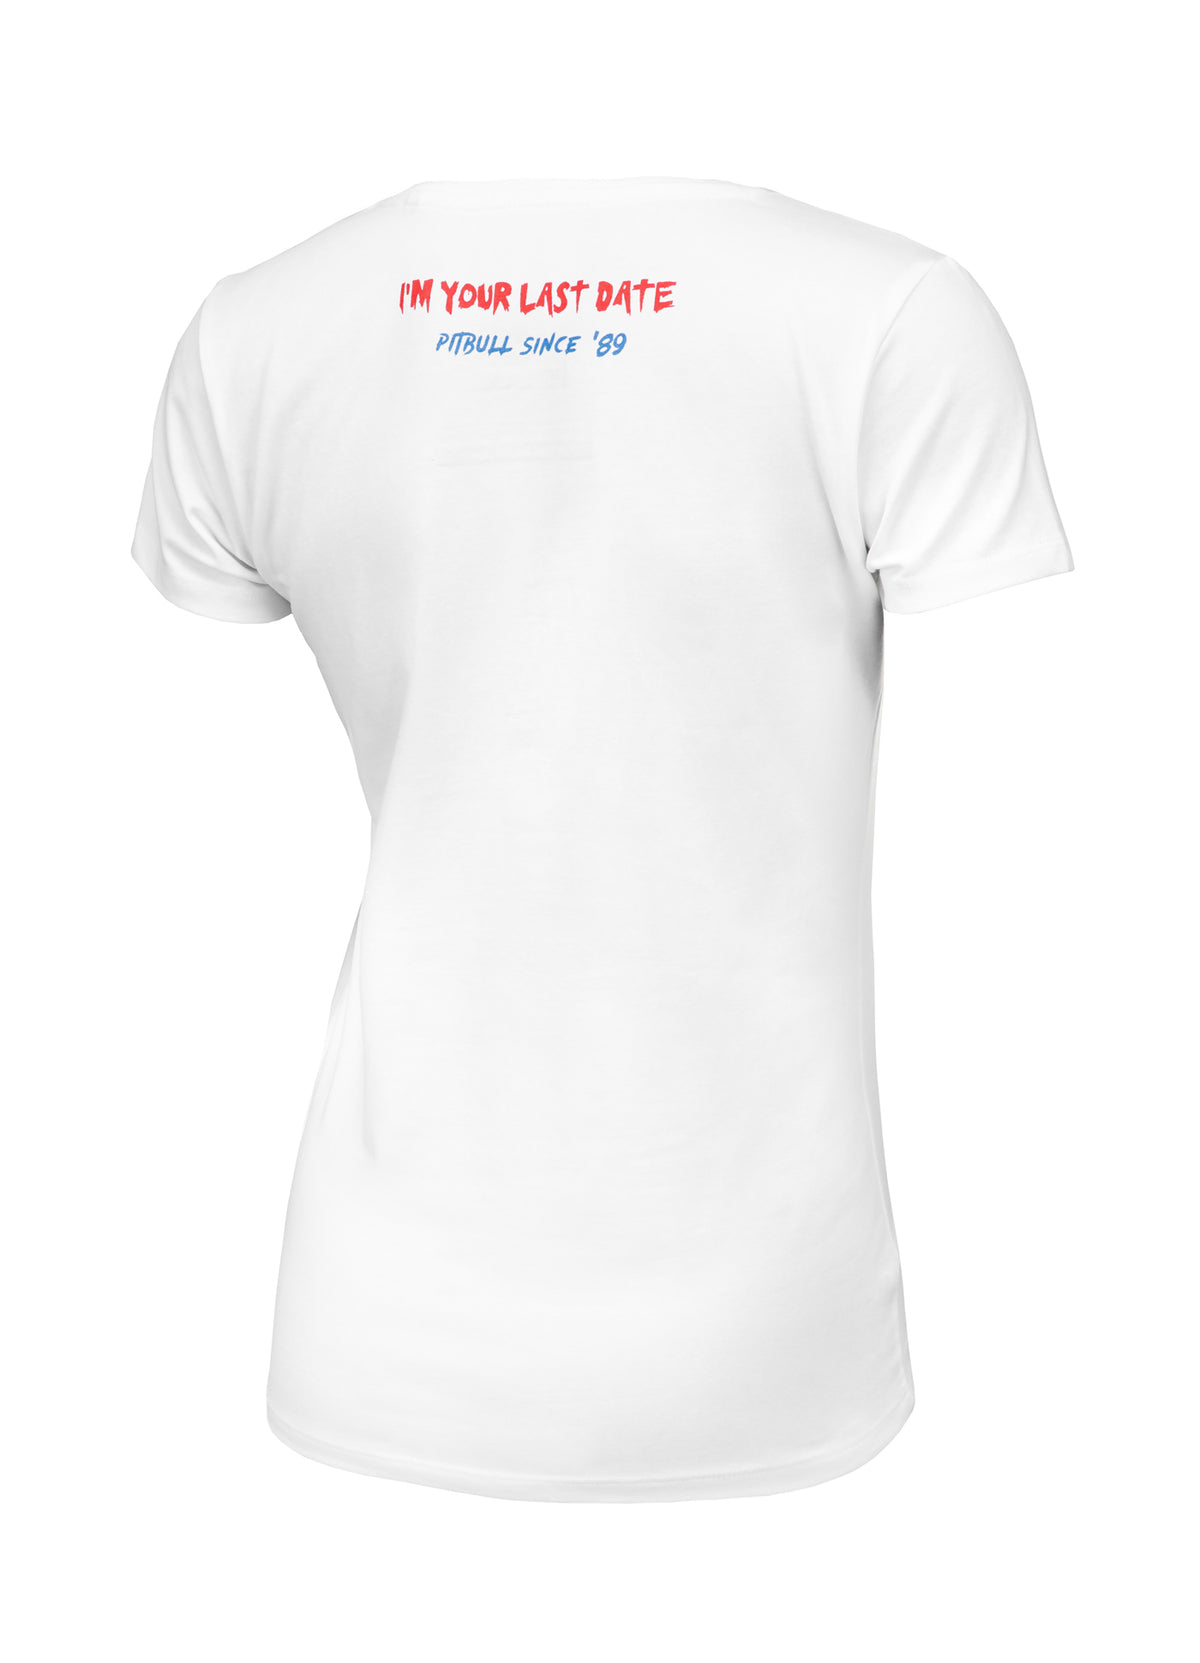 SWEETIE-CHU White T-shirt